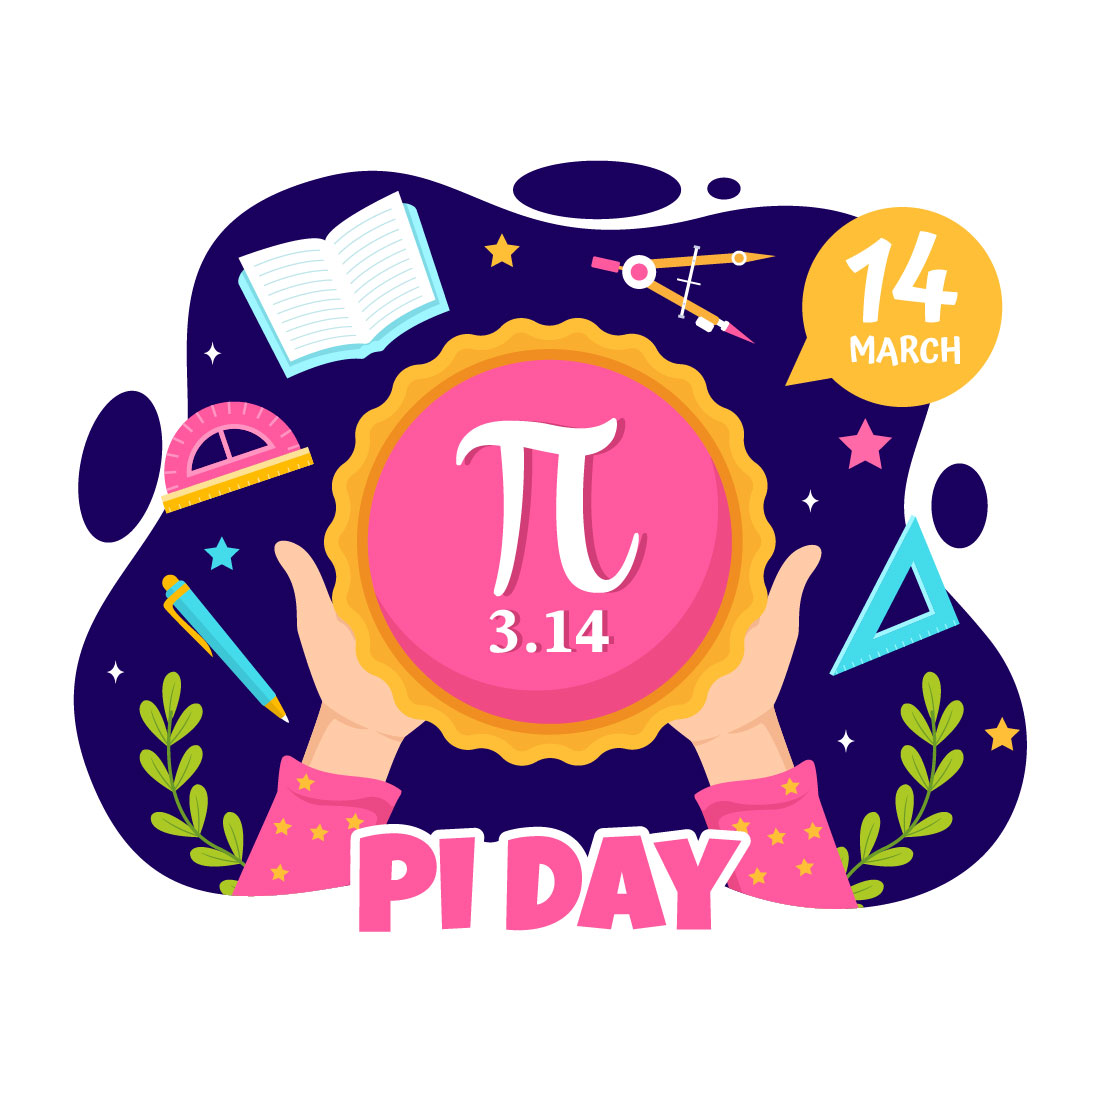 12 Happy Pi Day Illustration cover image.